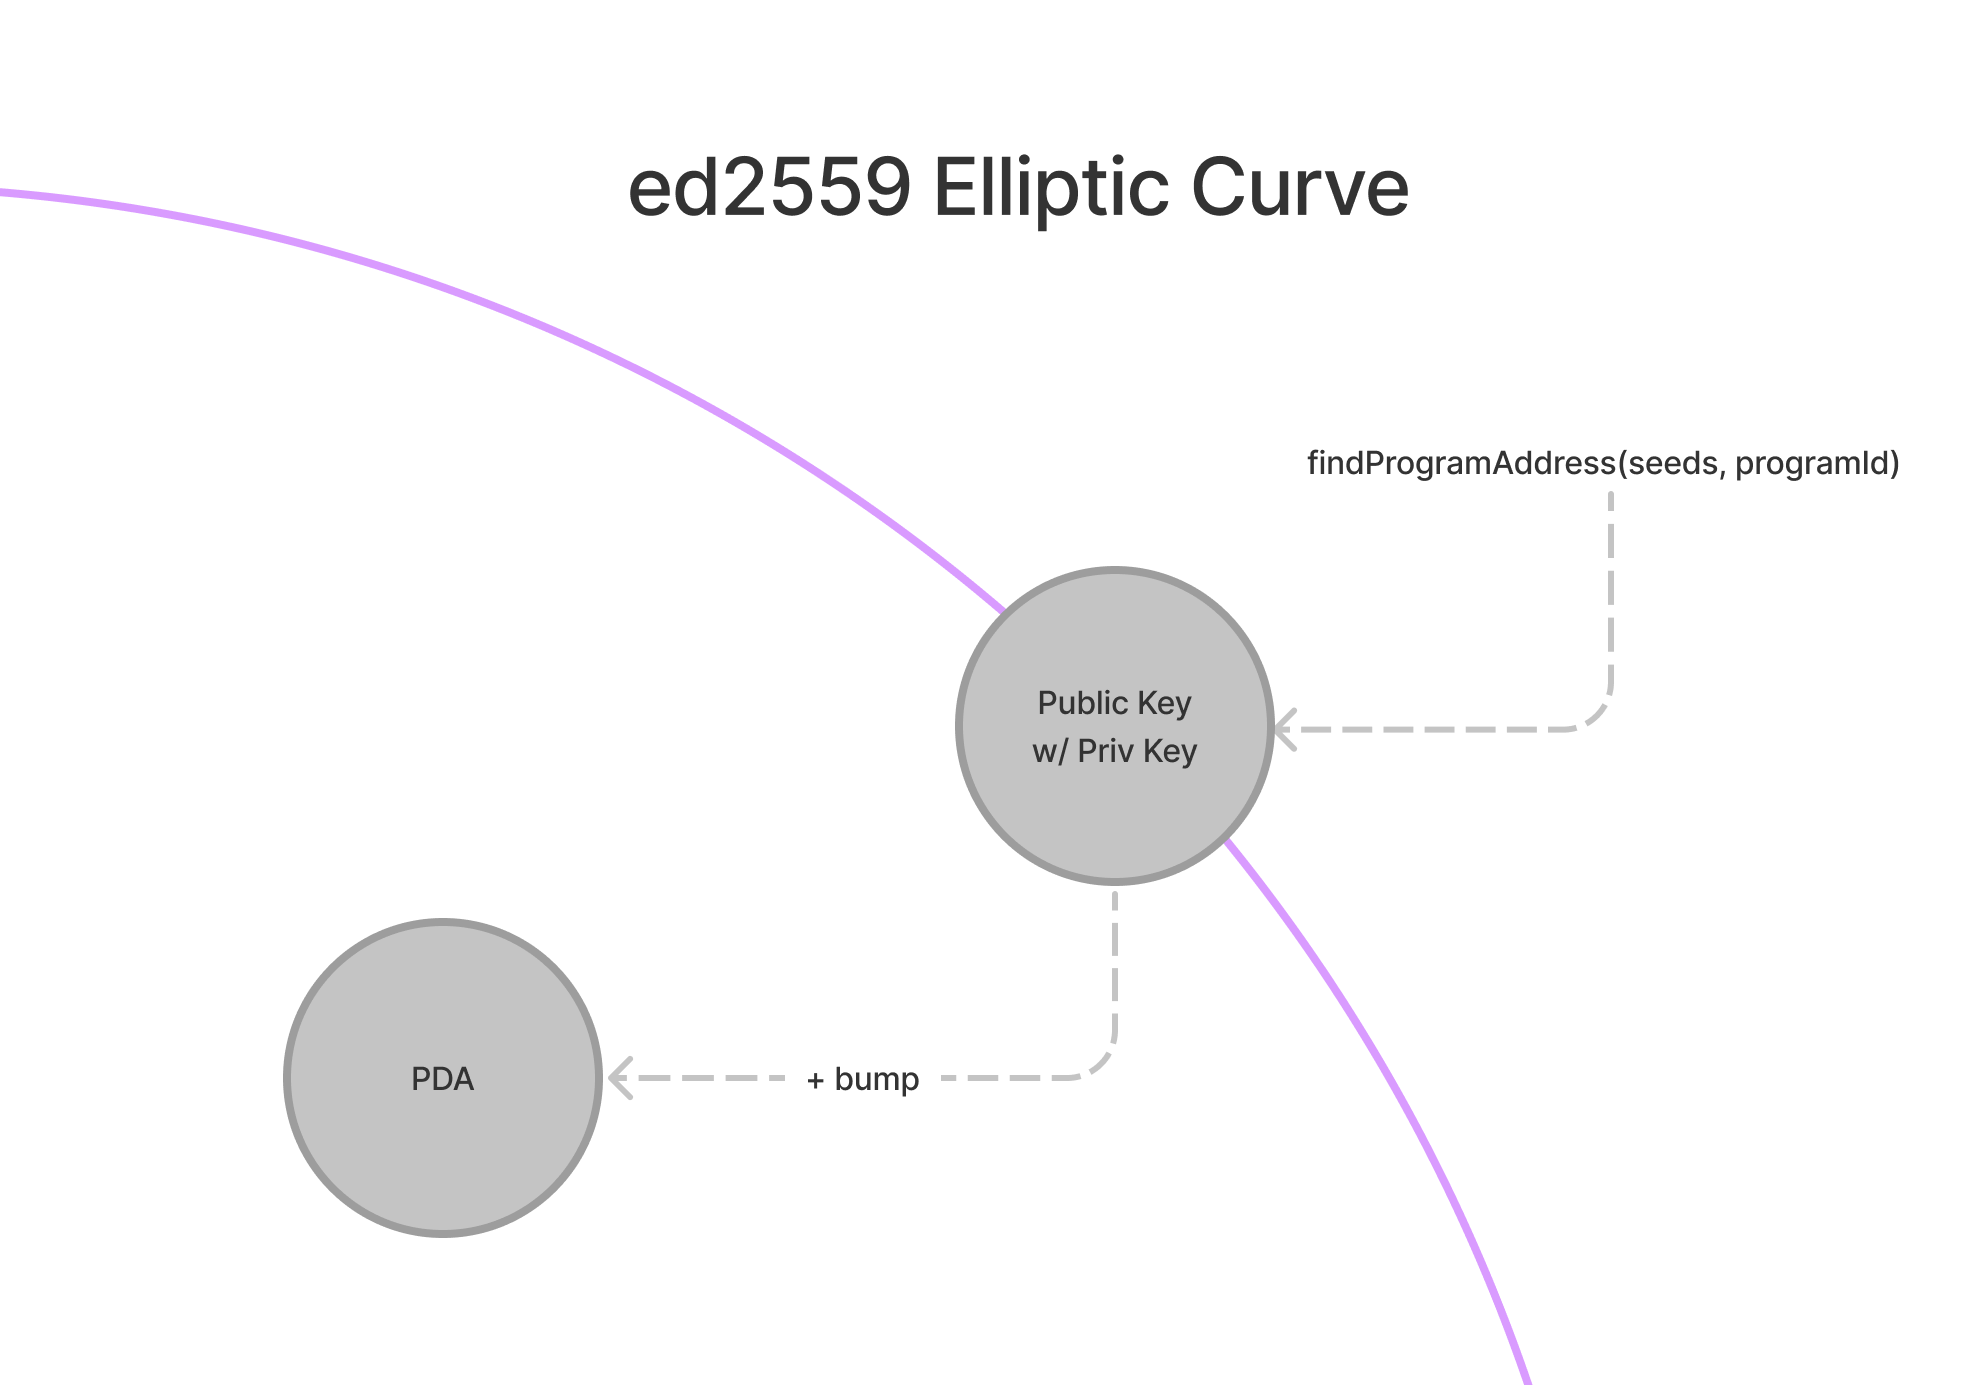 PDA on the ellipitic curve